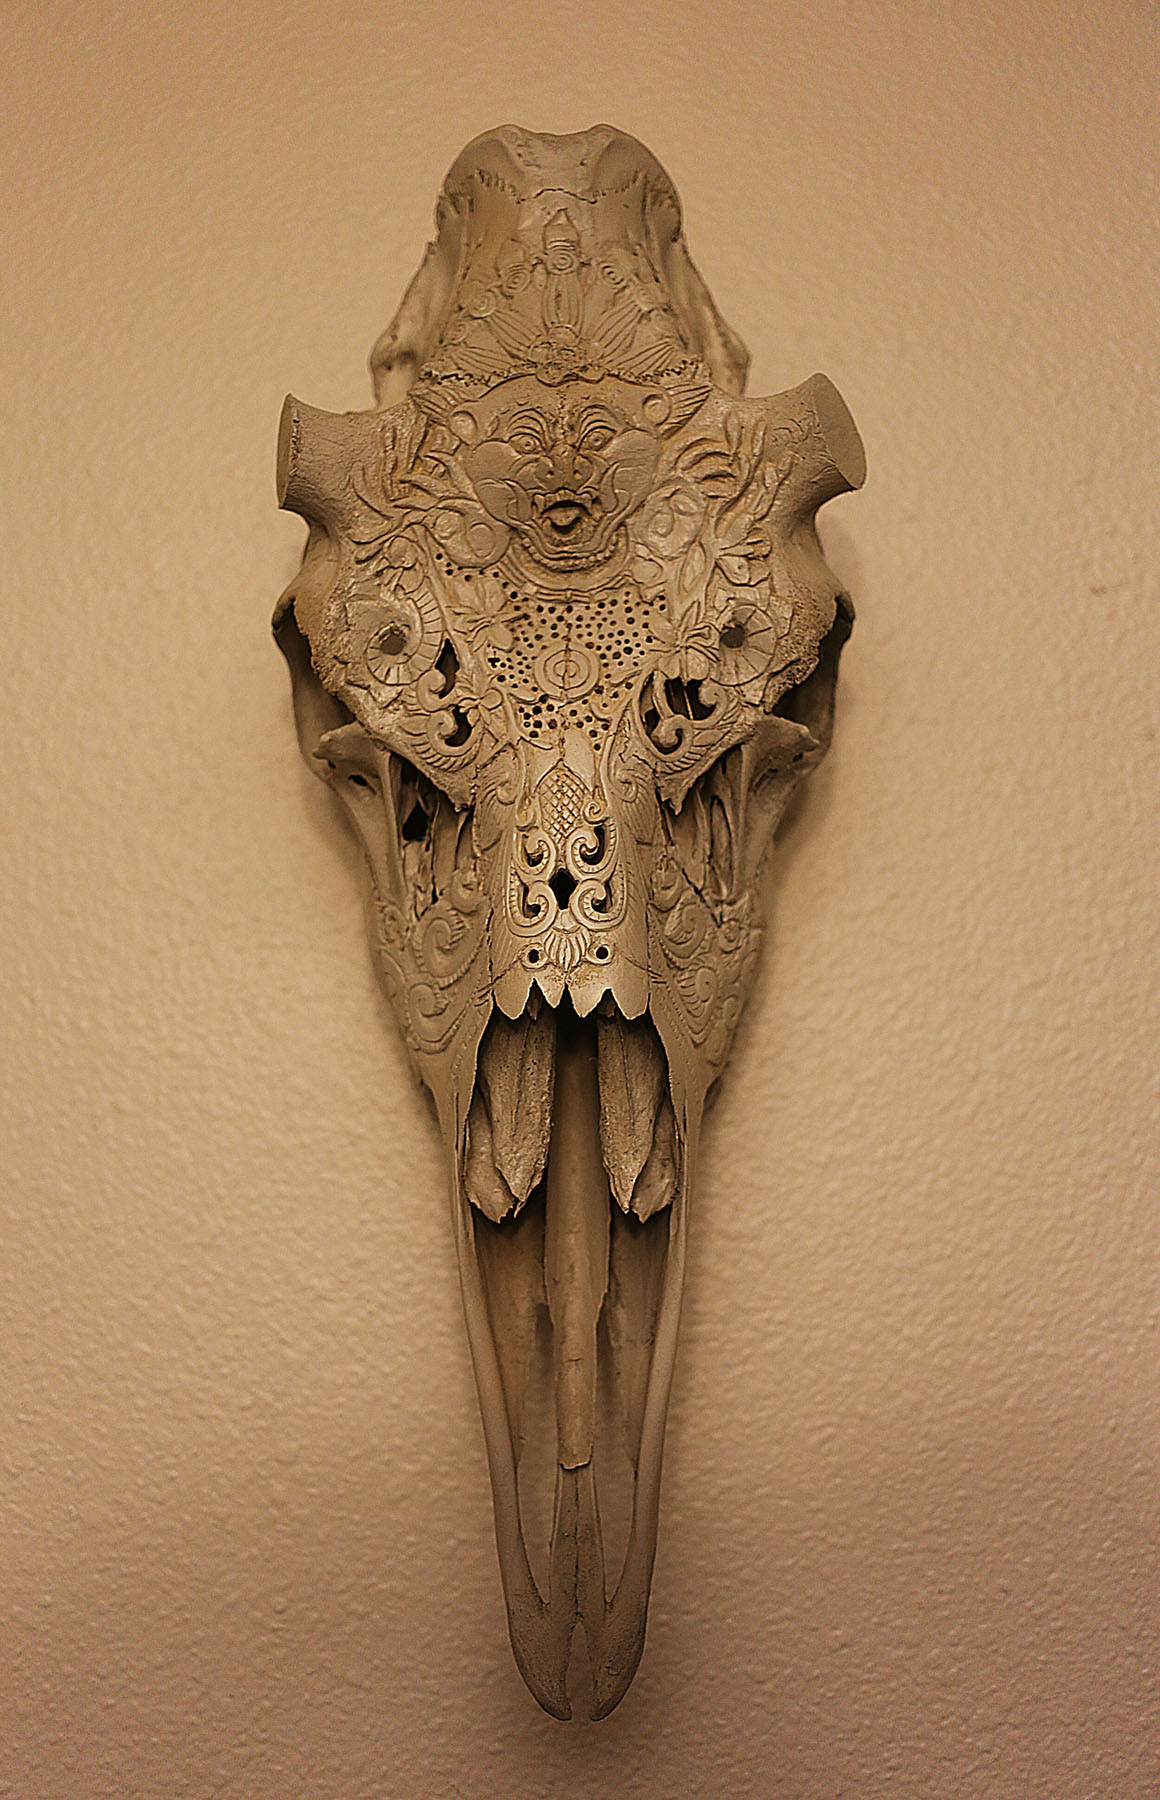 Carved moose skull. Image courtesy of Indi Walter